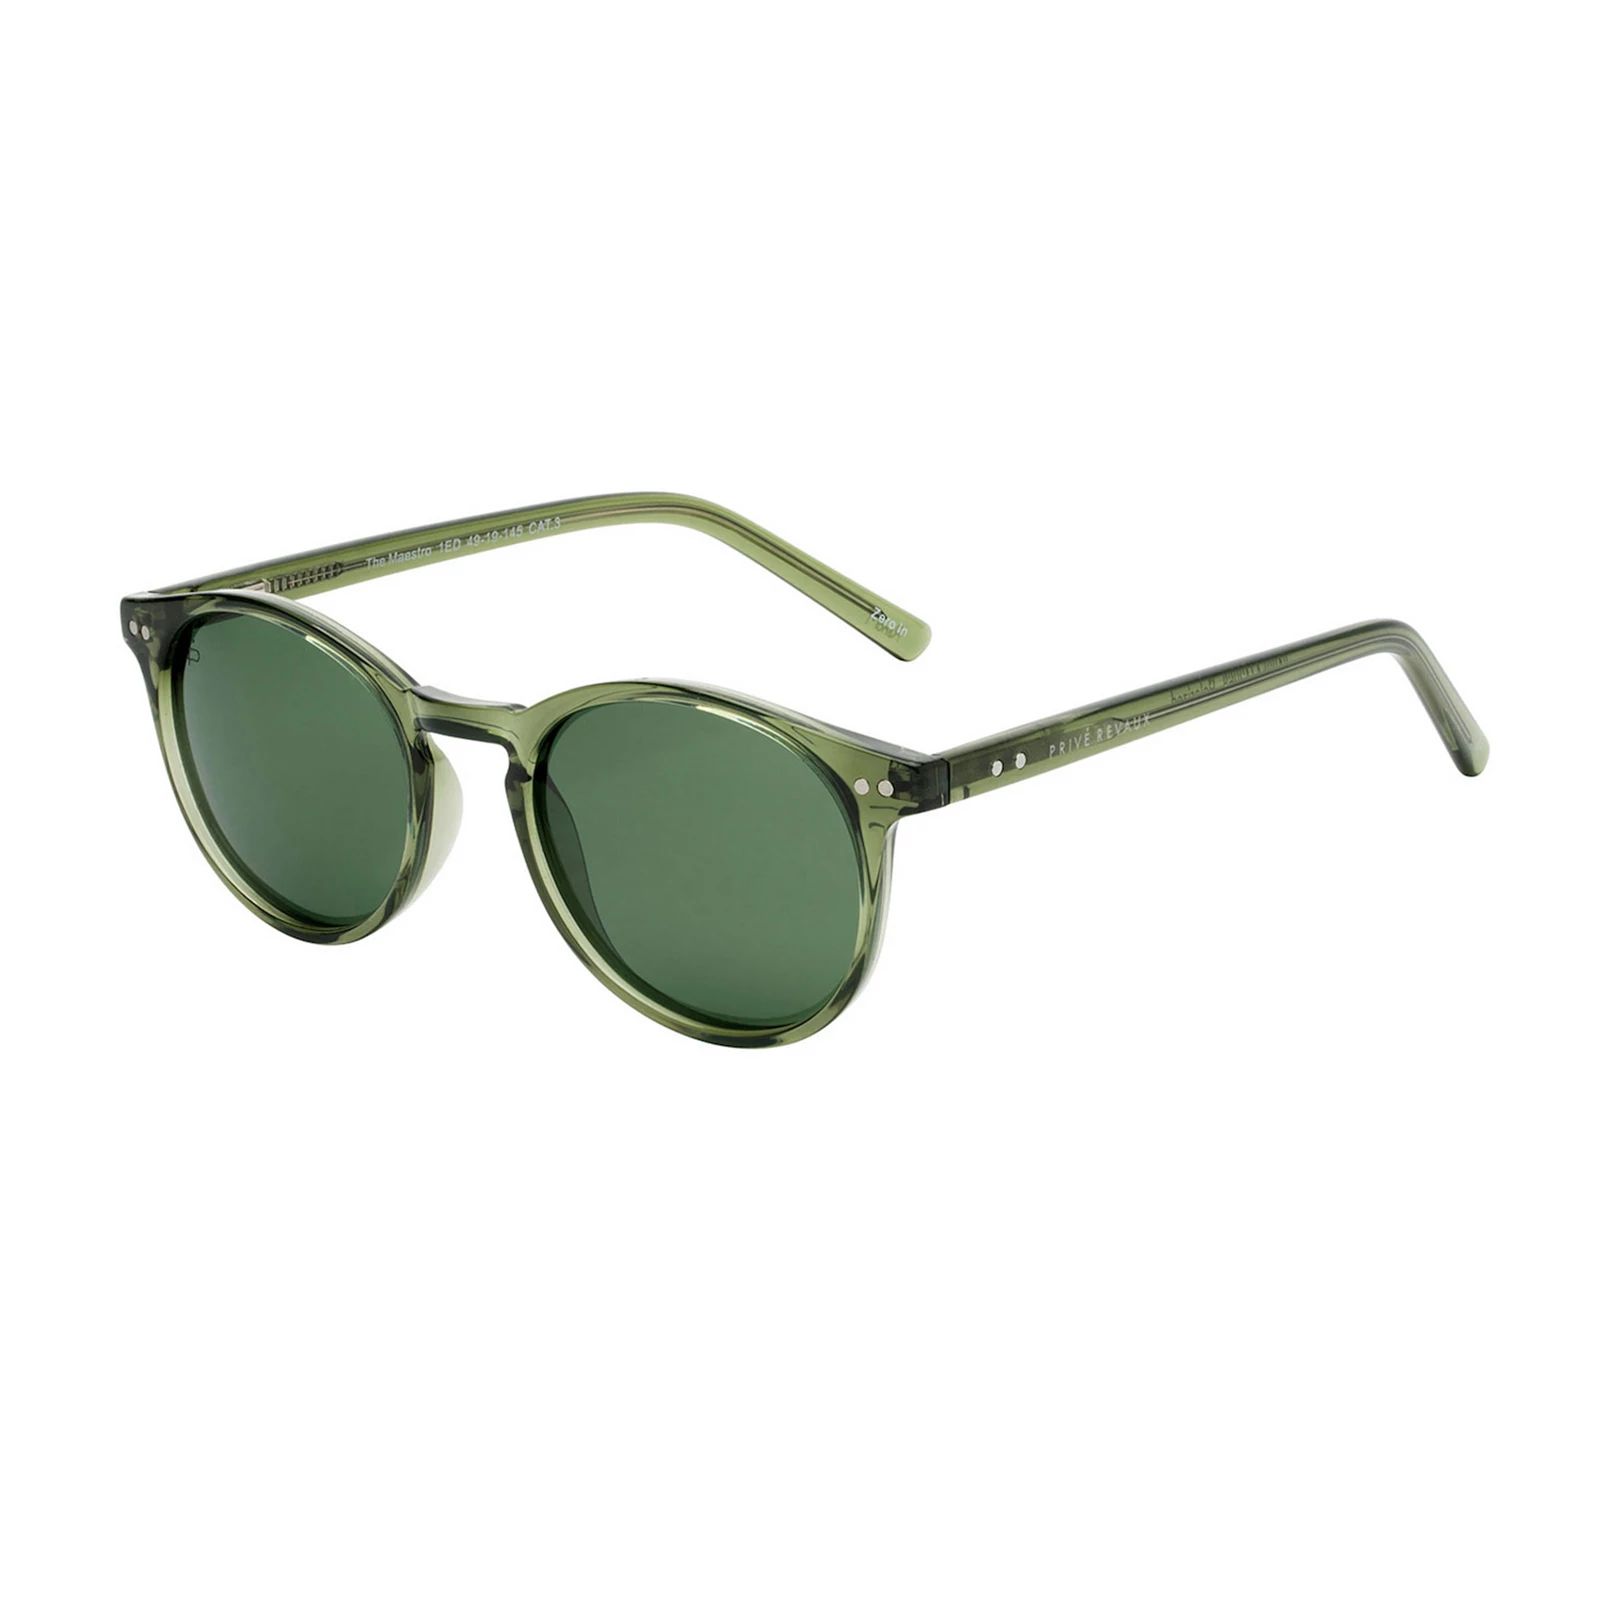 Privé Revaux The Maestro Sun X 52mm Round Sunglasses, Med Green | Kohl's